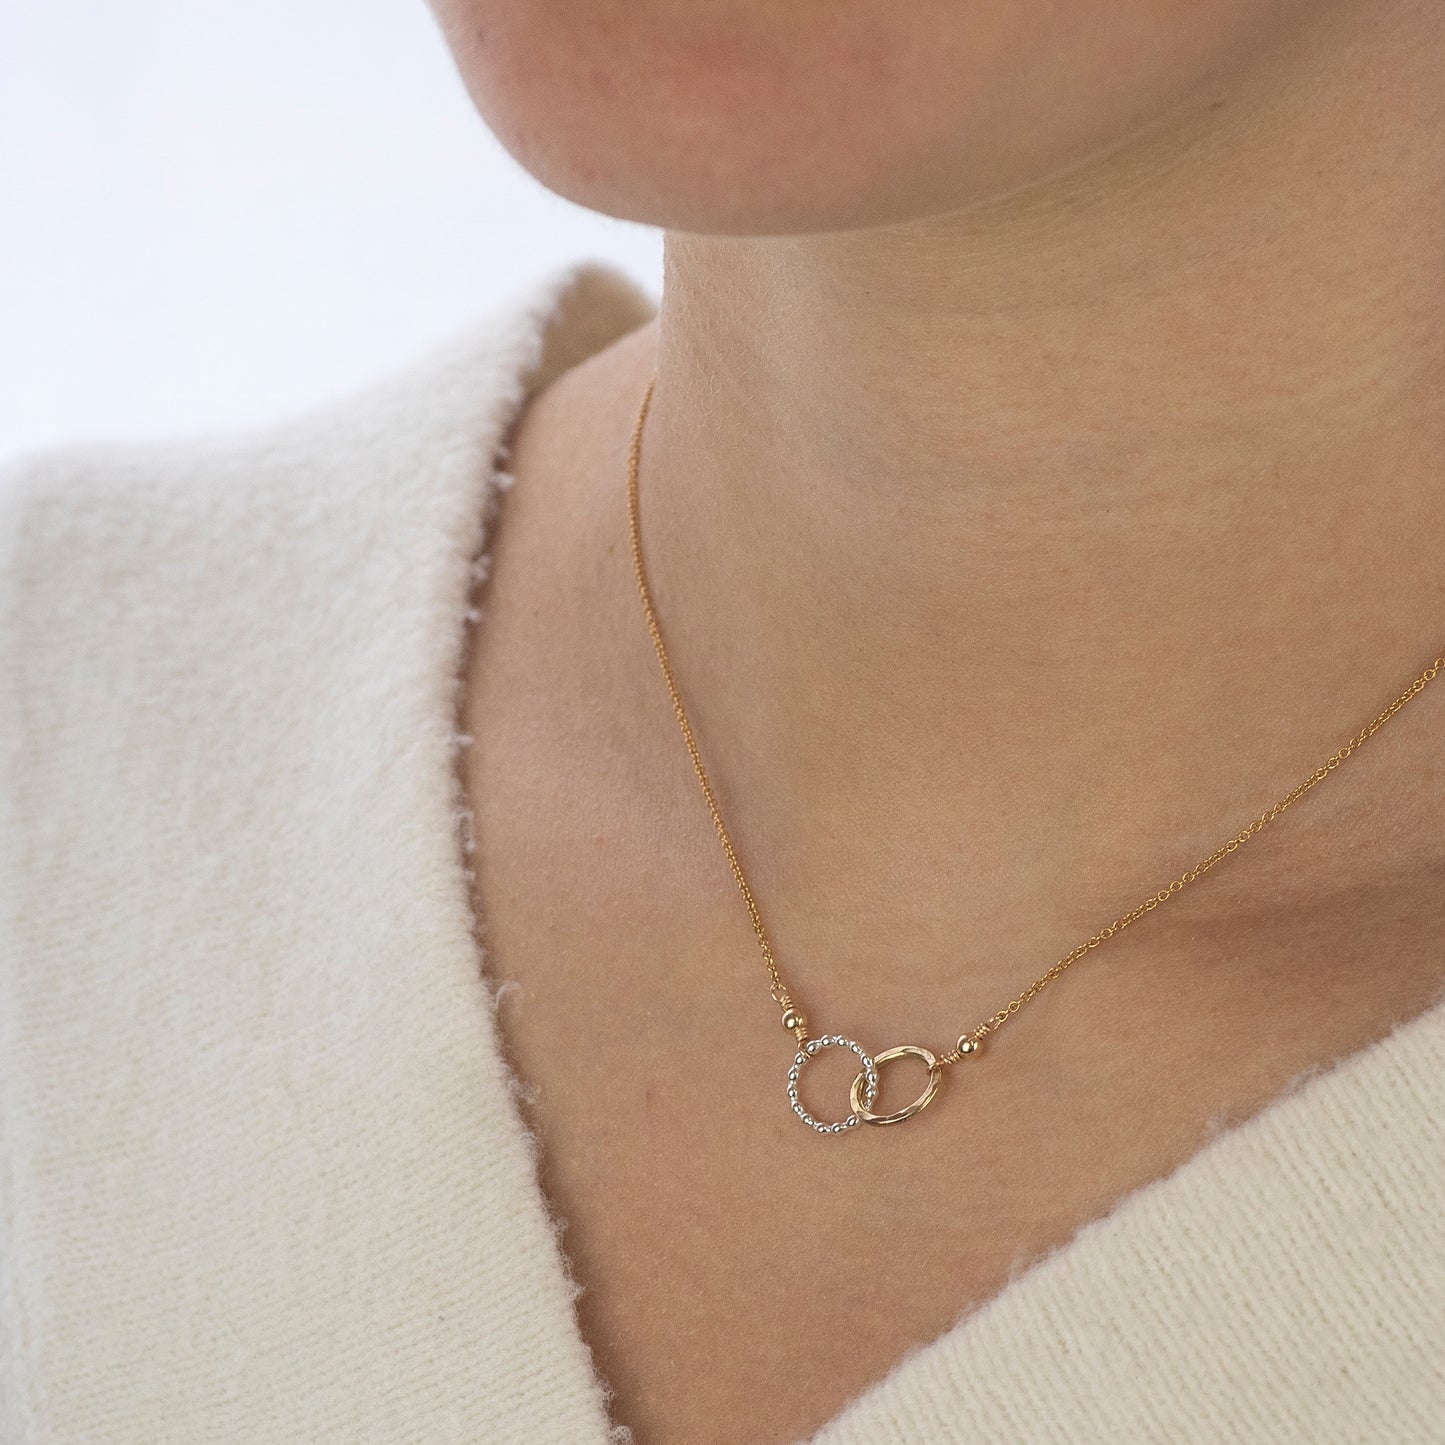 Lovelink Necklace - Linked for a Lifetime - Silver & Gold